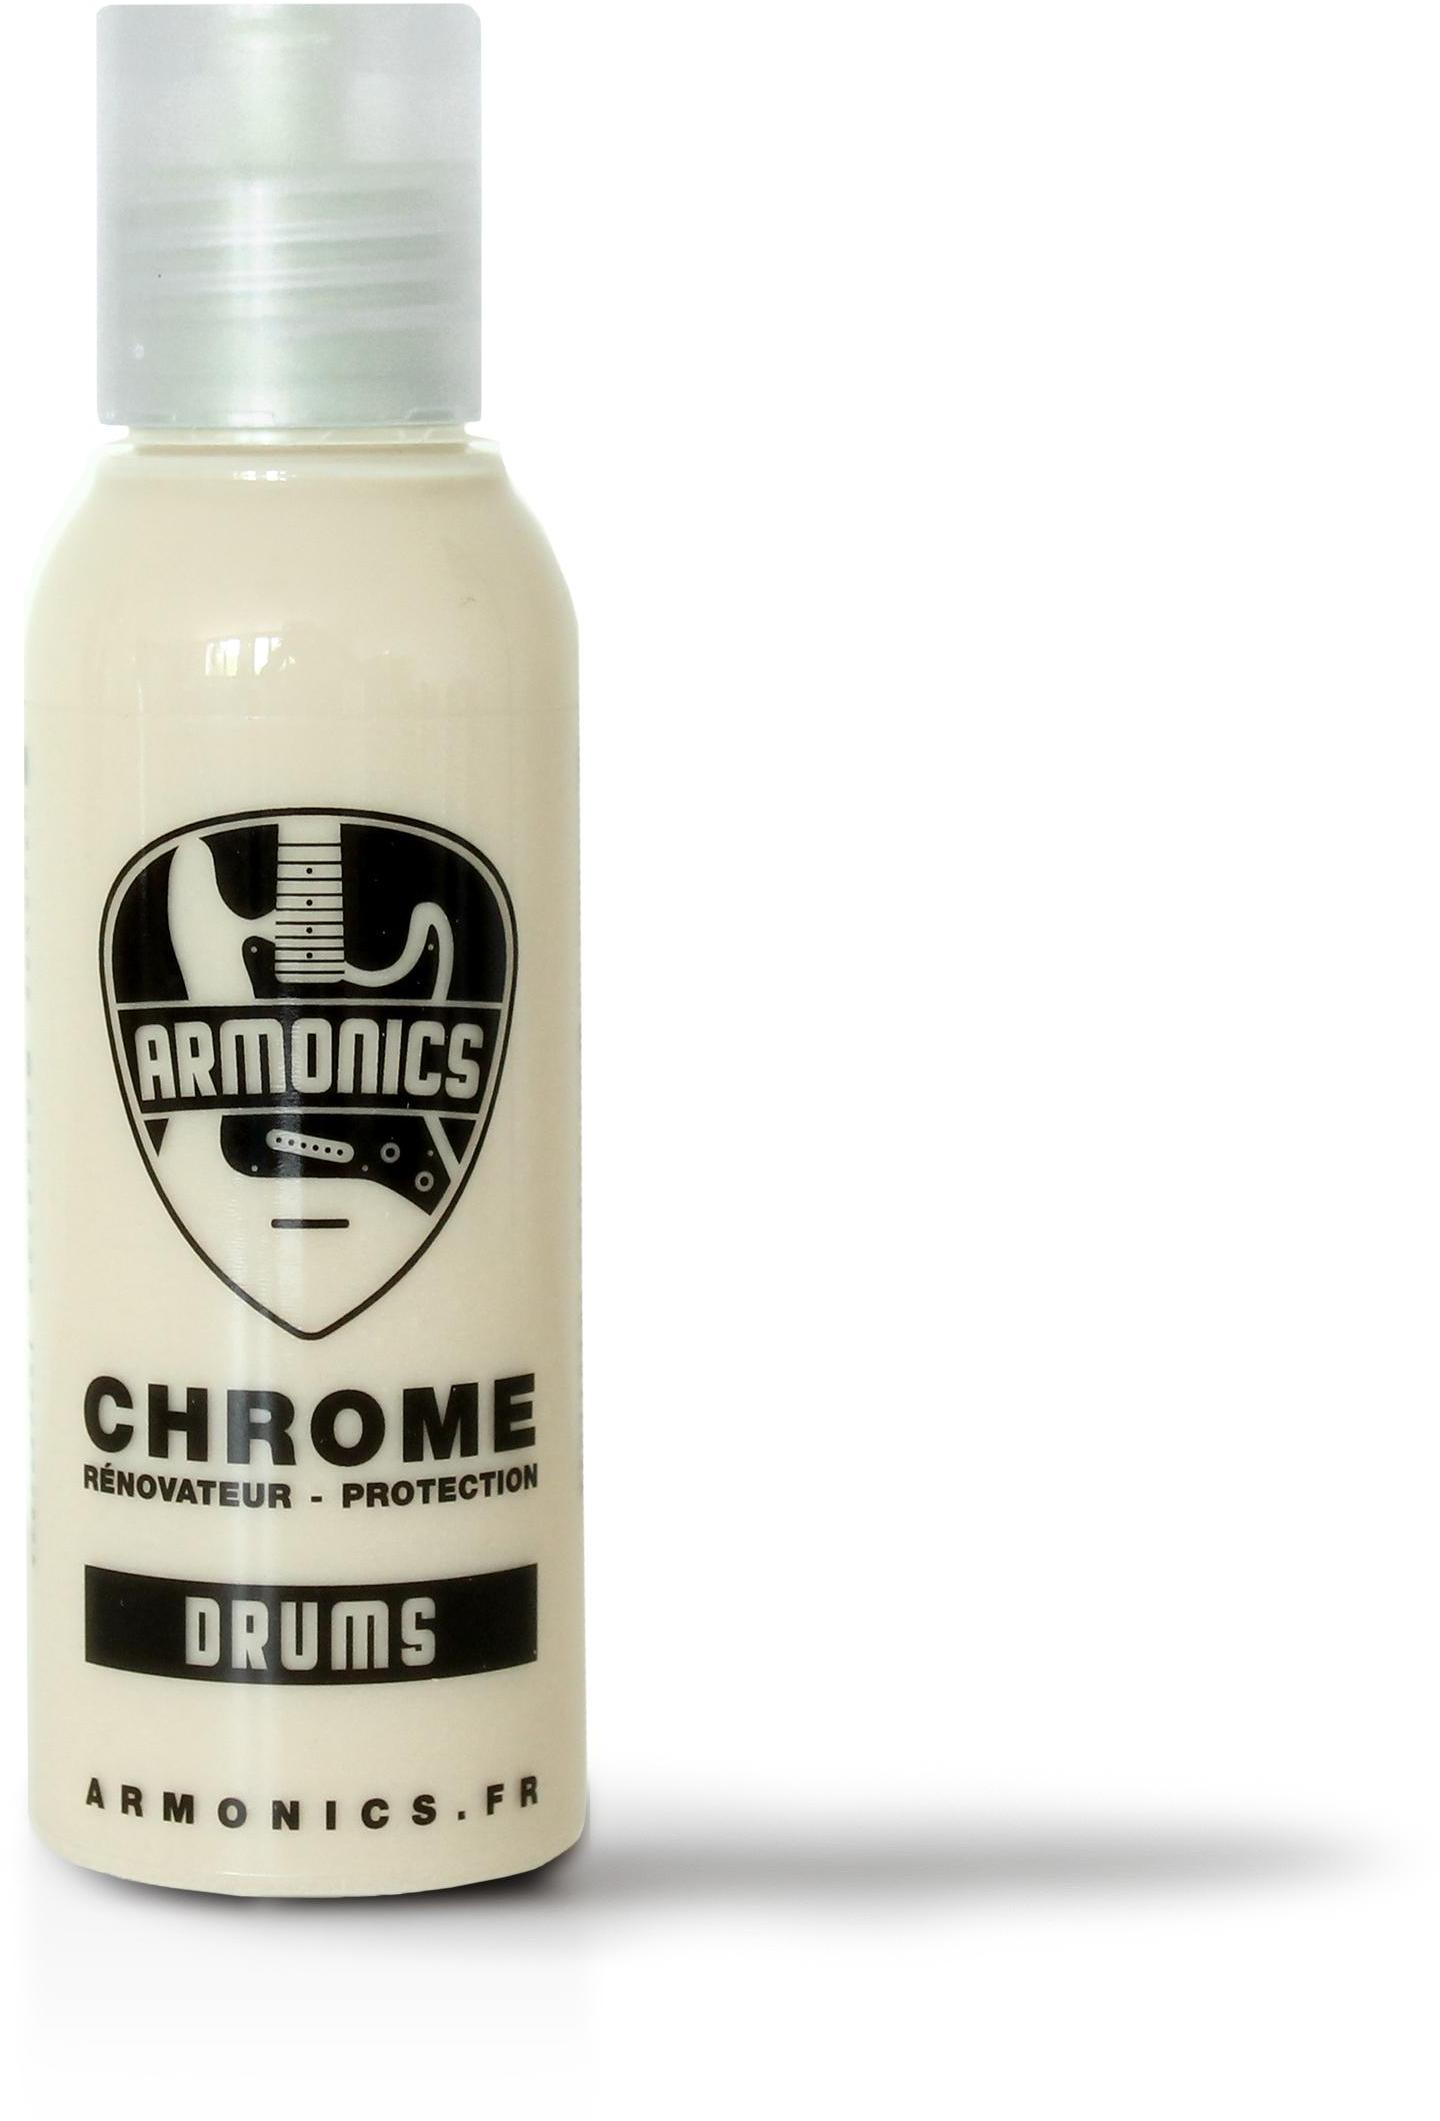  Armonics CHROME